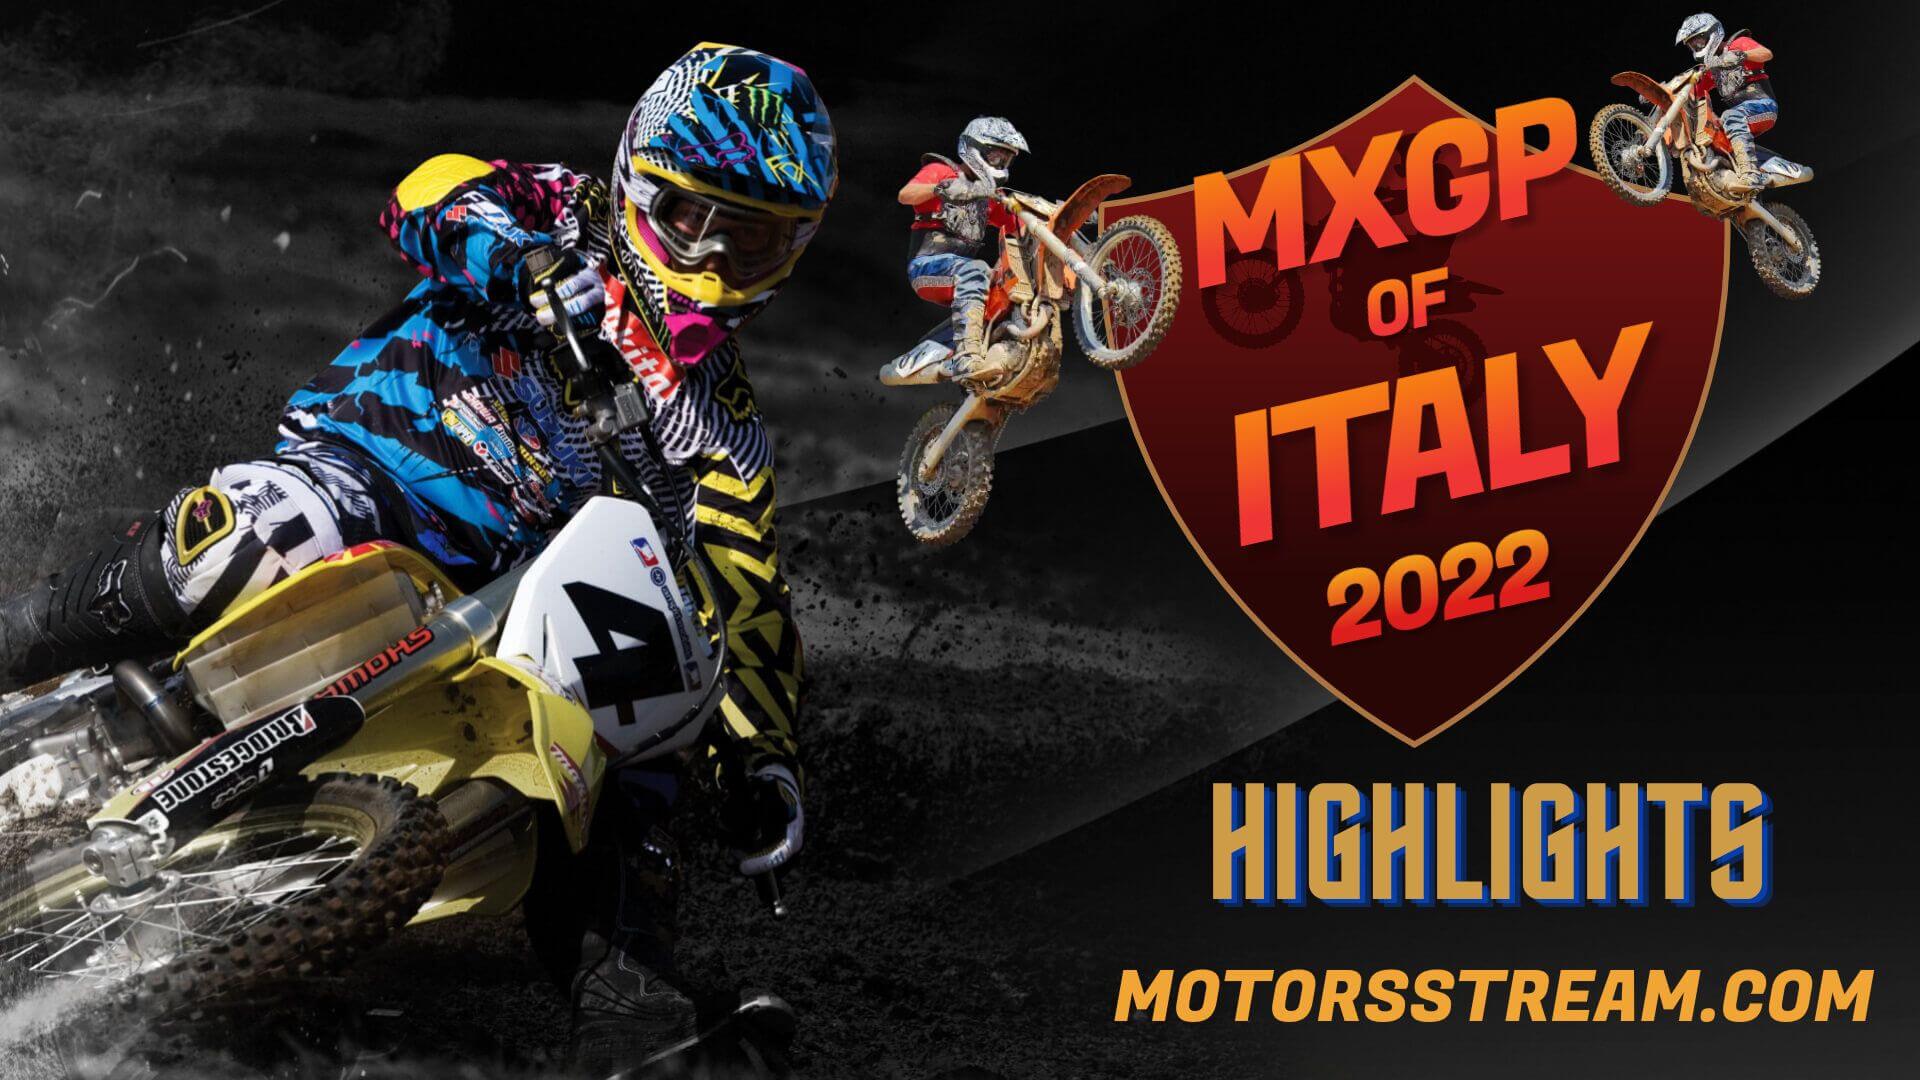 FIM Motocross Italy Highlights 2022 MXGP